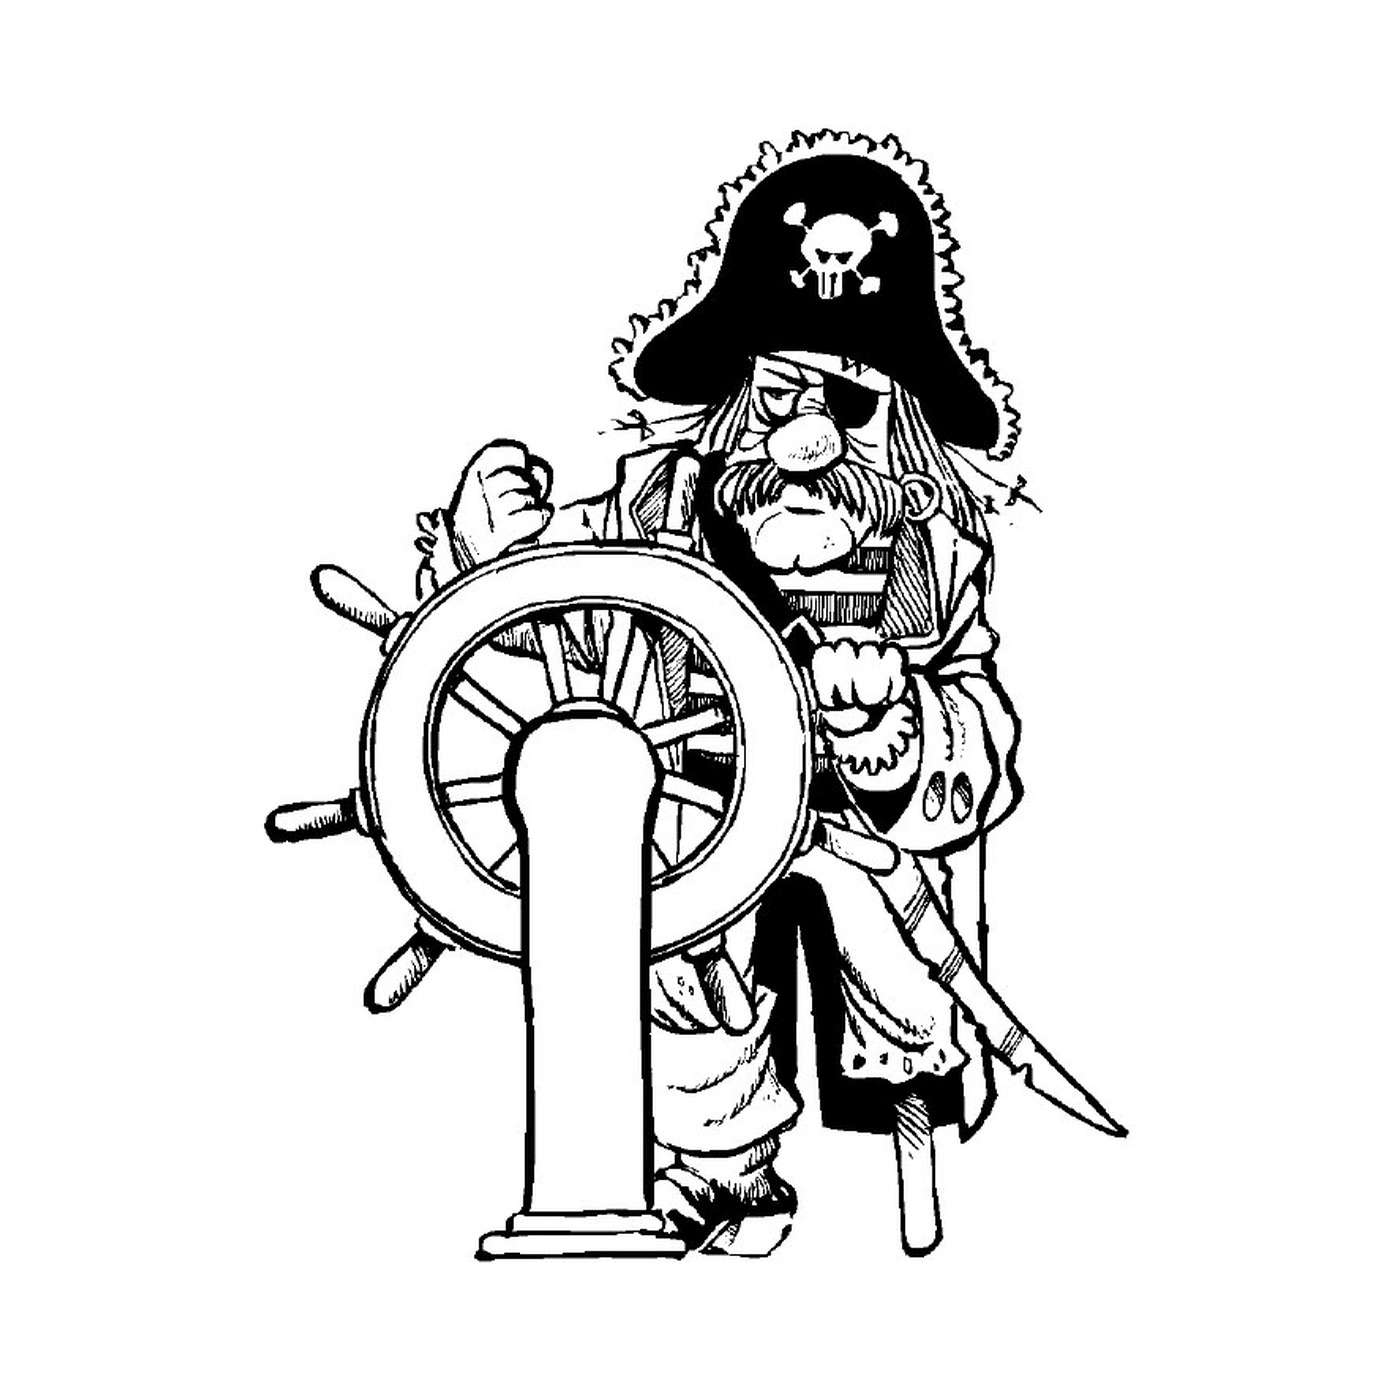   Un pirate au gouvernail 